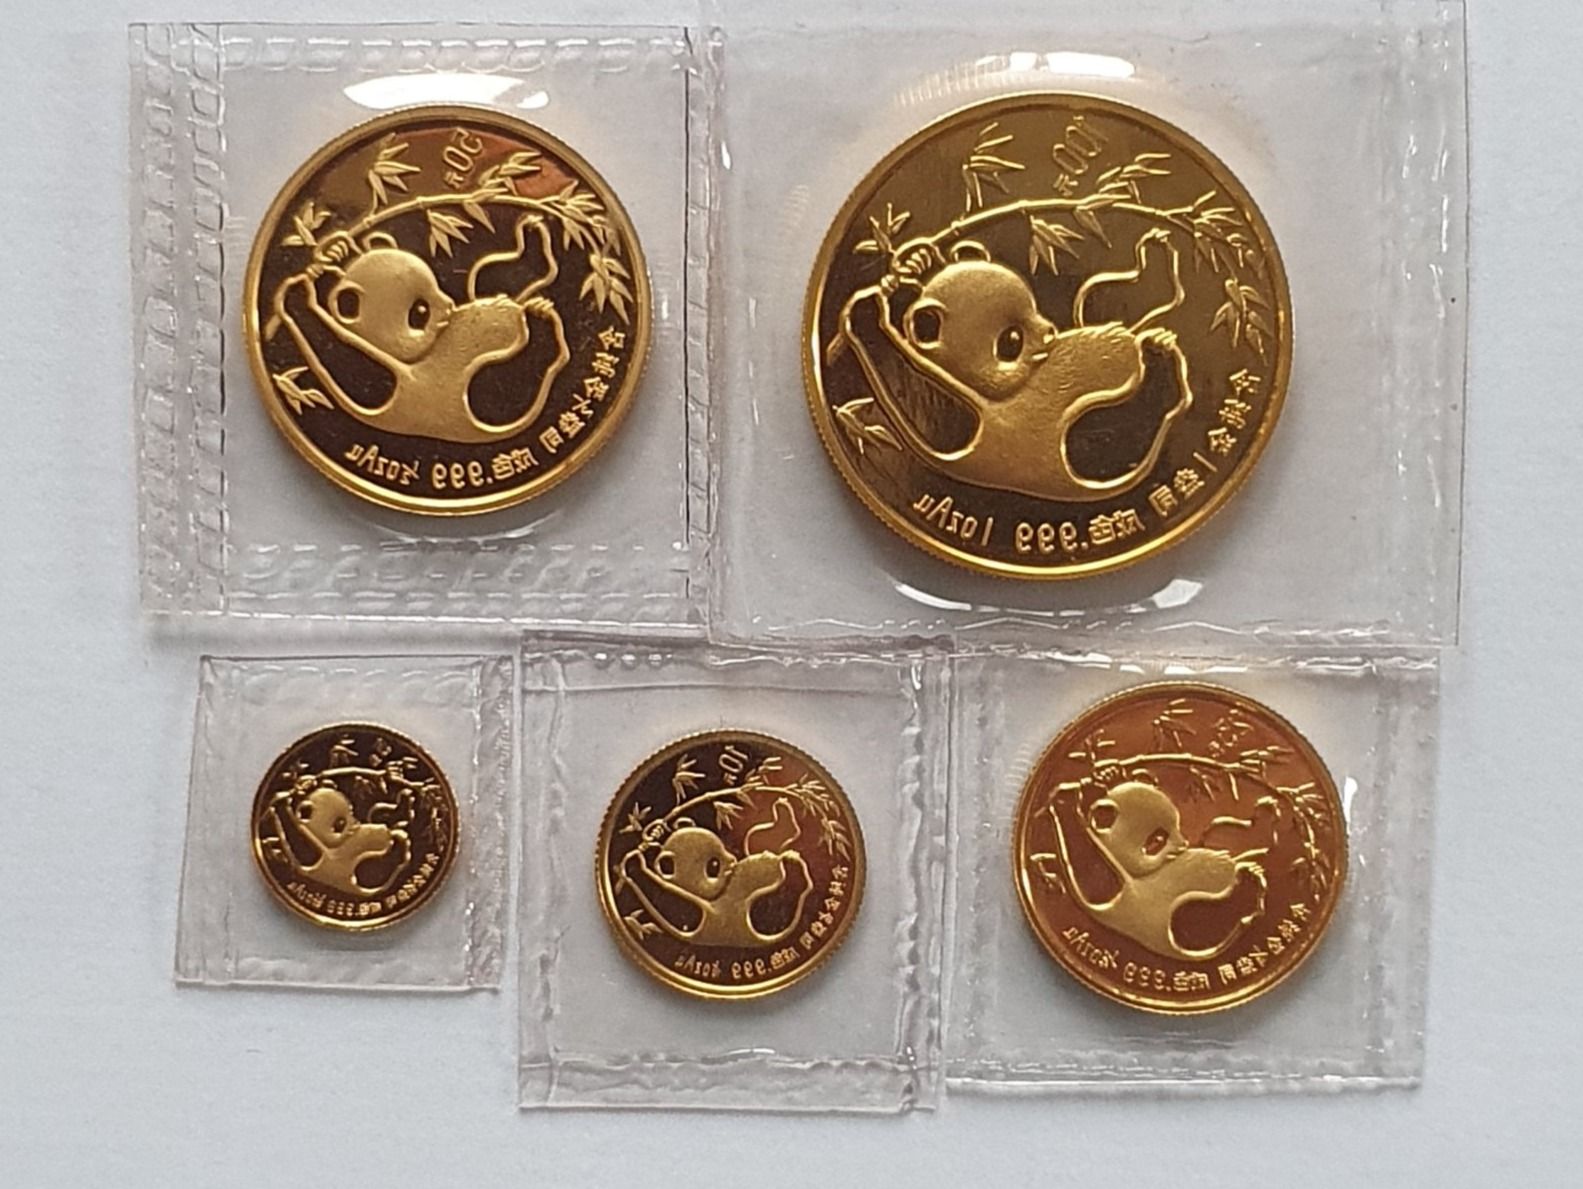  Goldmünzen Panda-Set 1985   